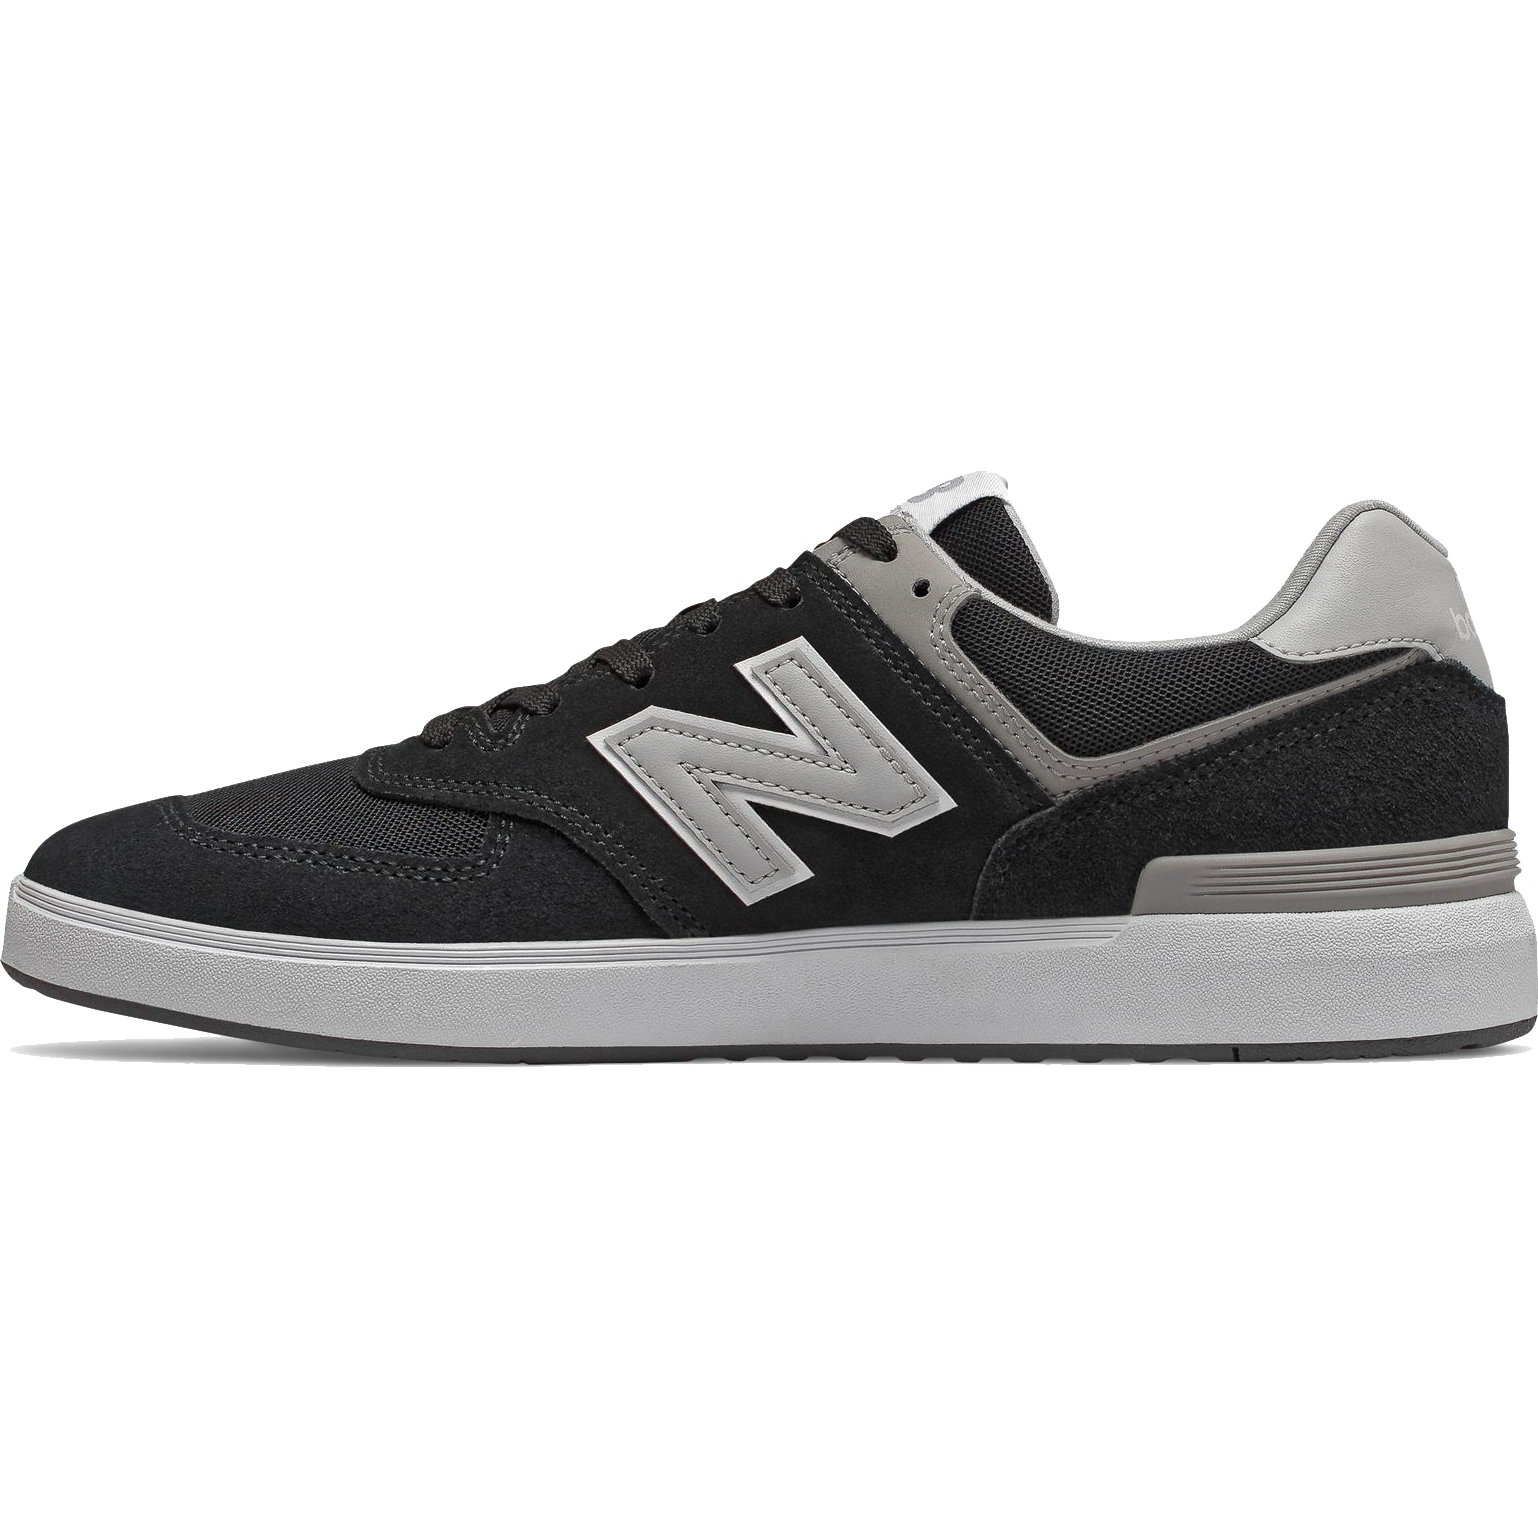 New Balance Mens AM 574 Skate Trainers - Black 2951